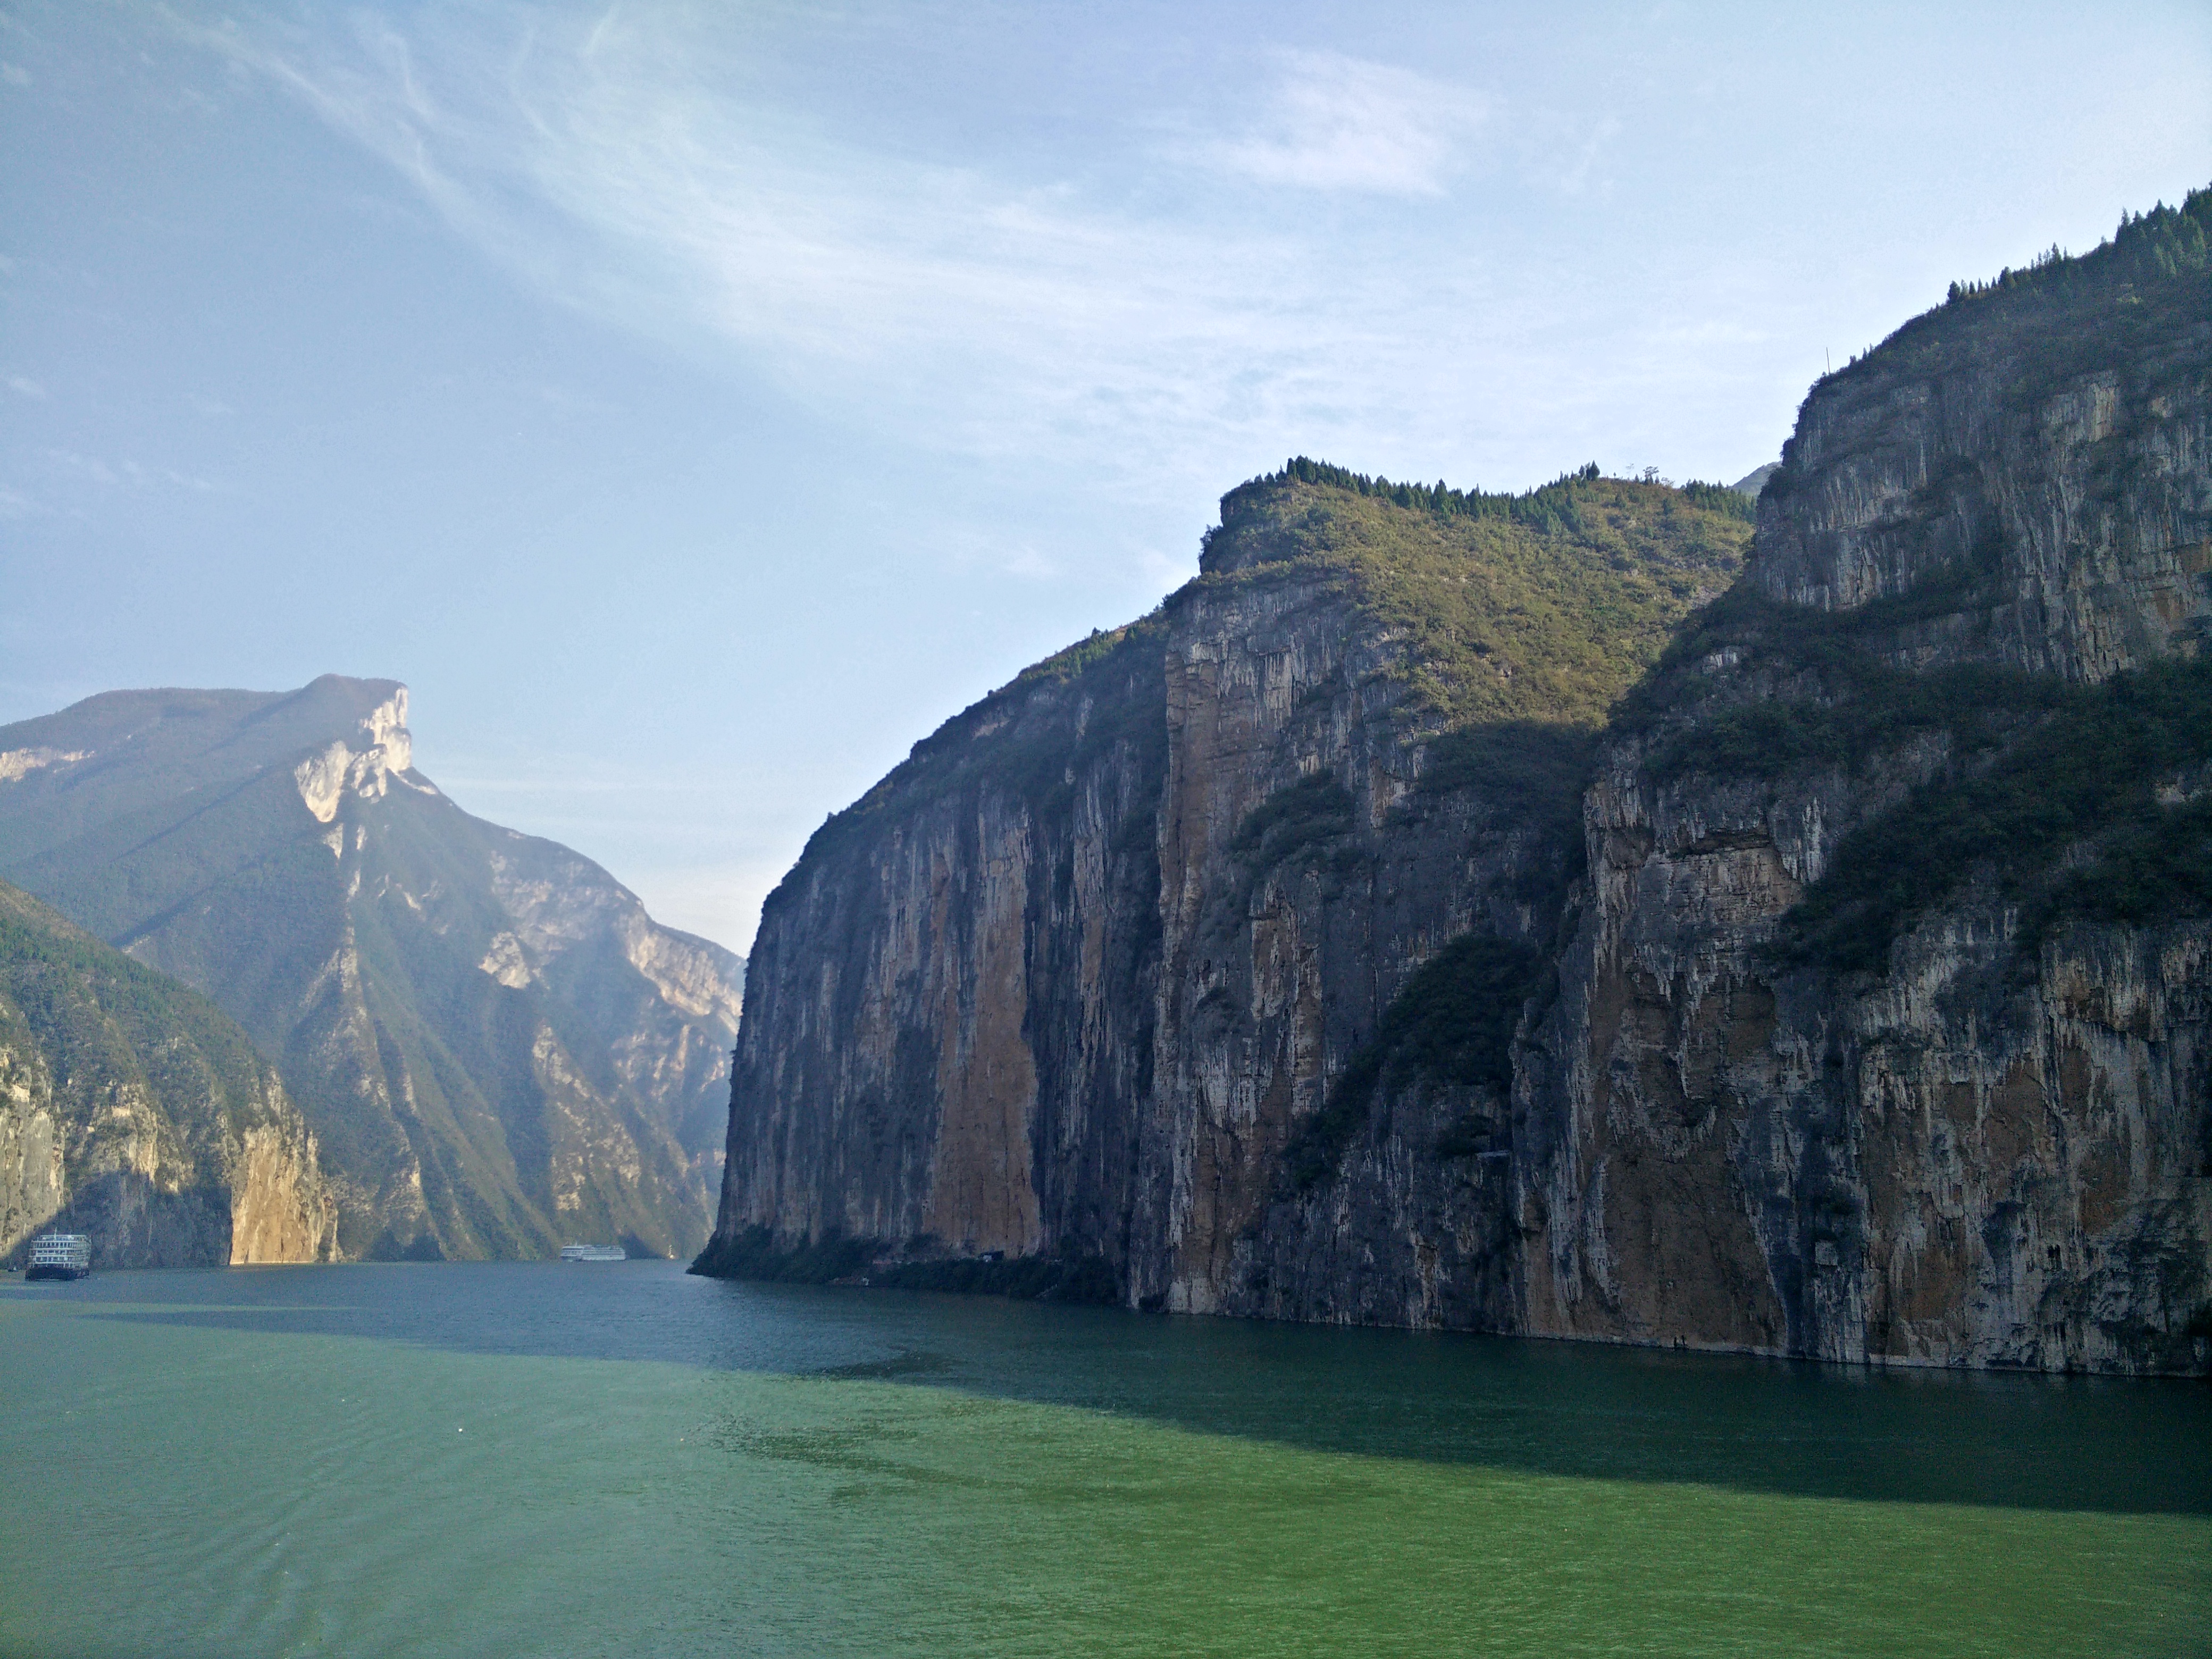 QuTang Gorge